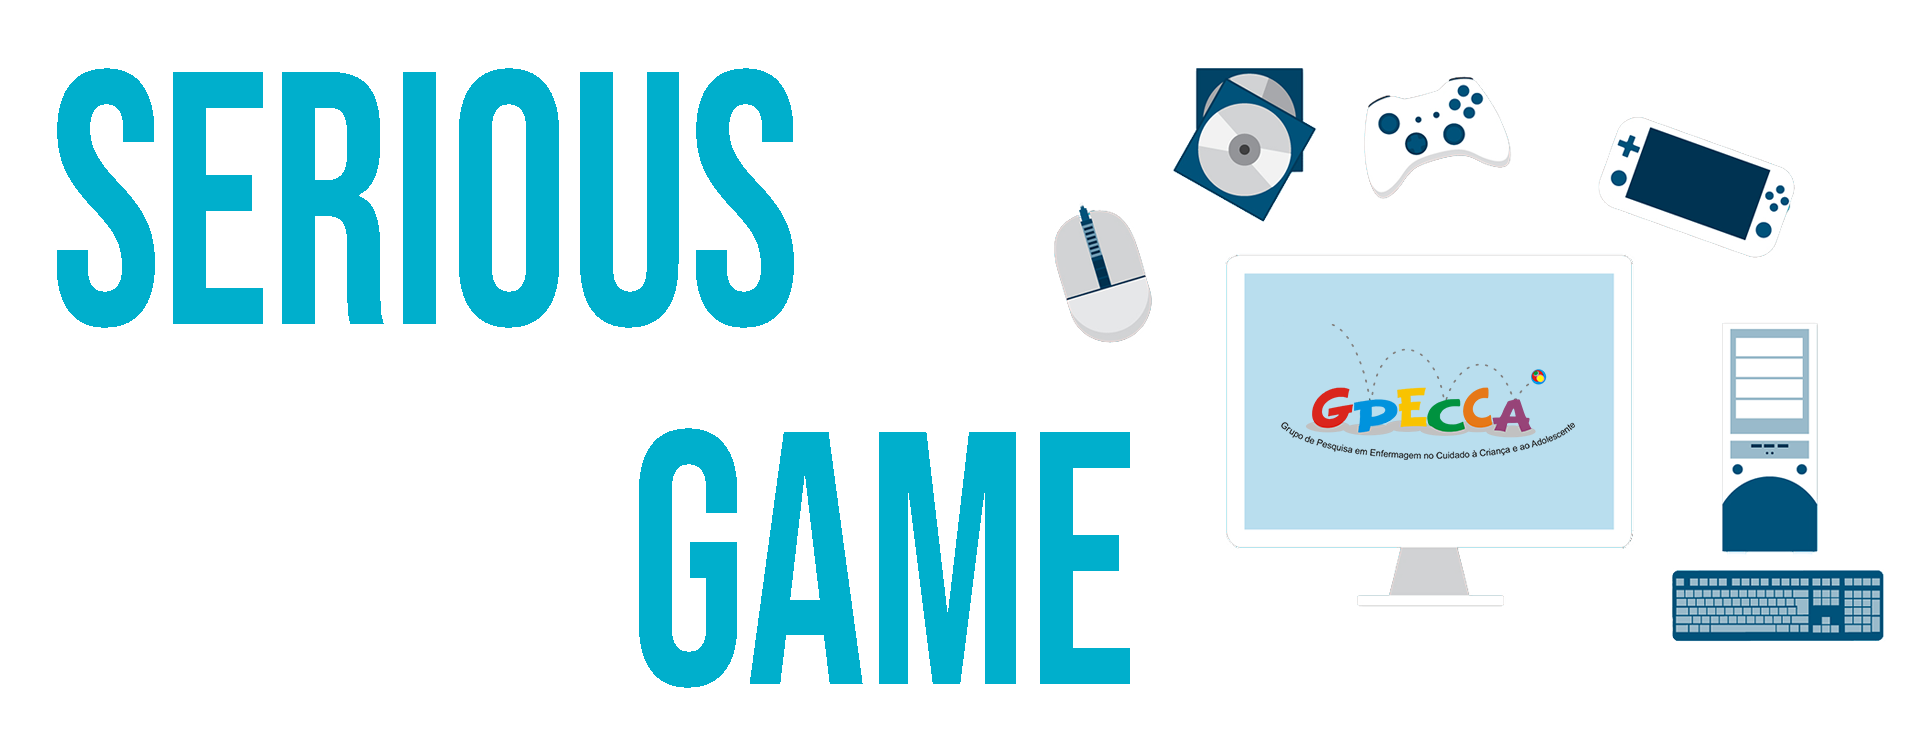 Jogos Educacionais / Serious Games + 3 Exemplos – MakerZine